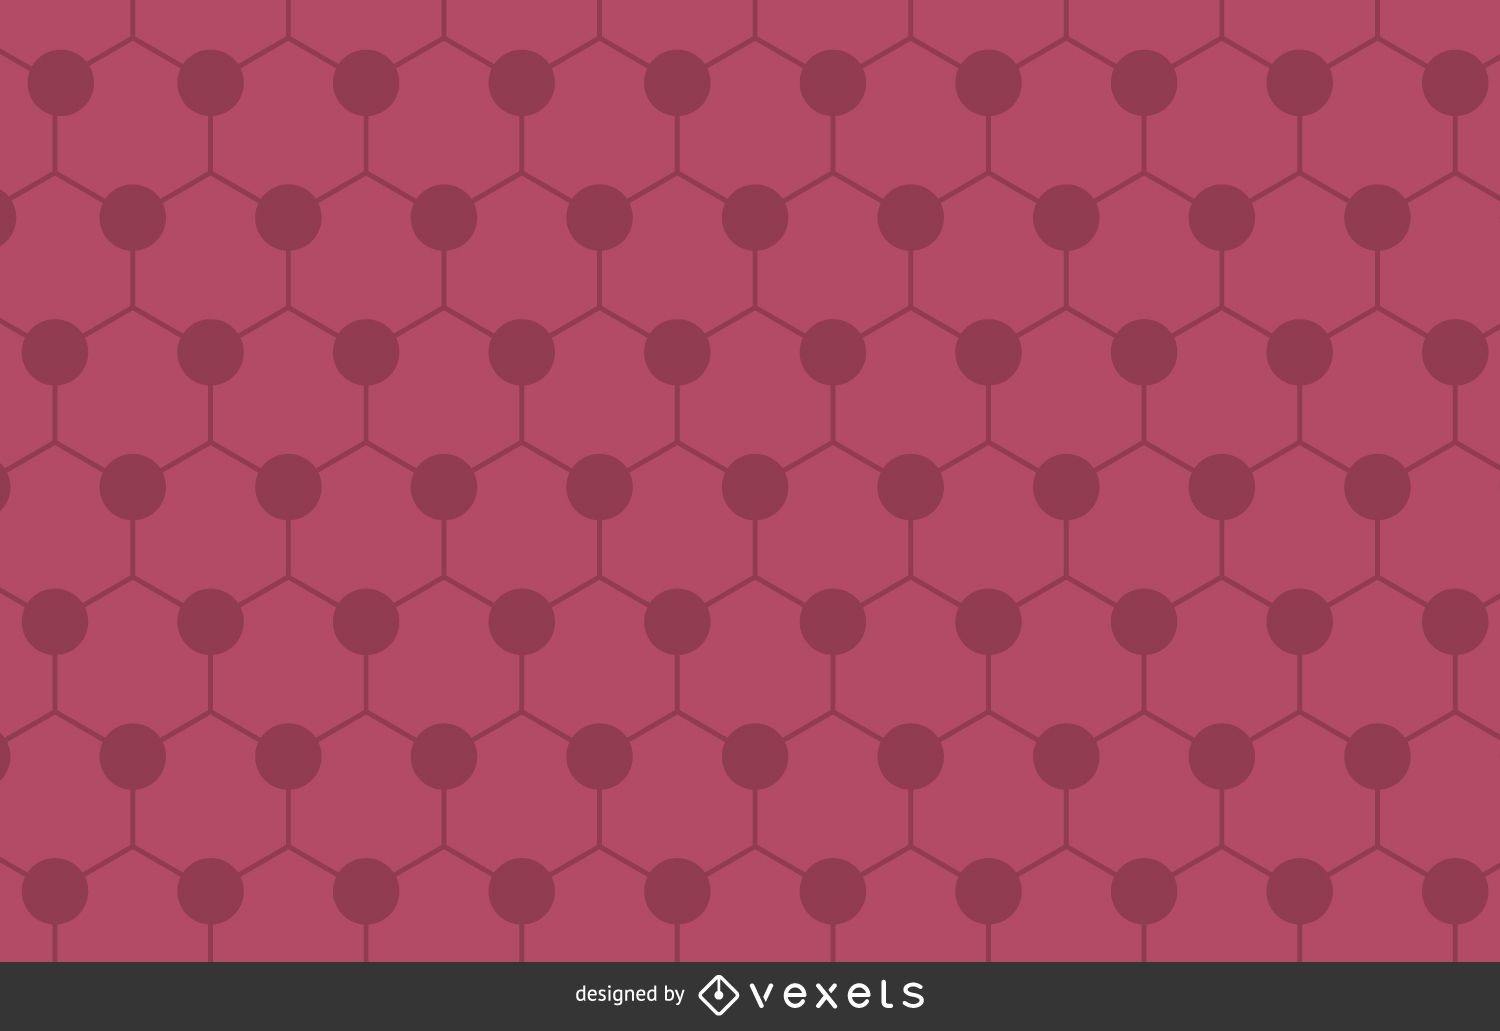 Pink hexagon polygonal background